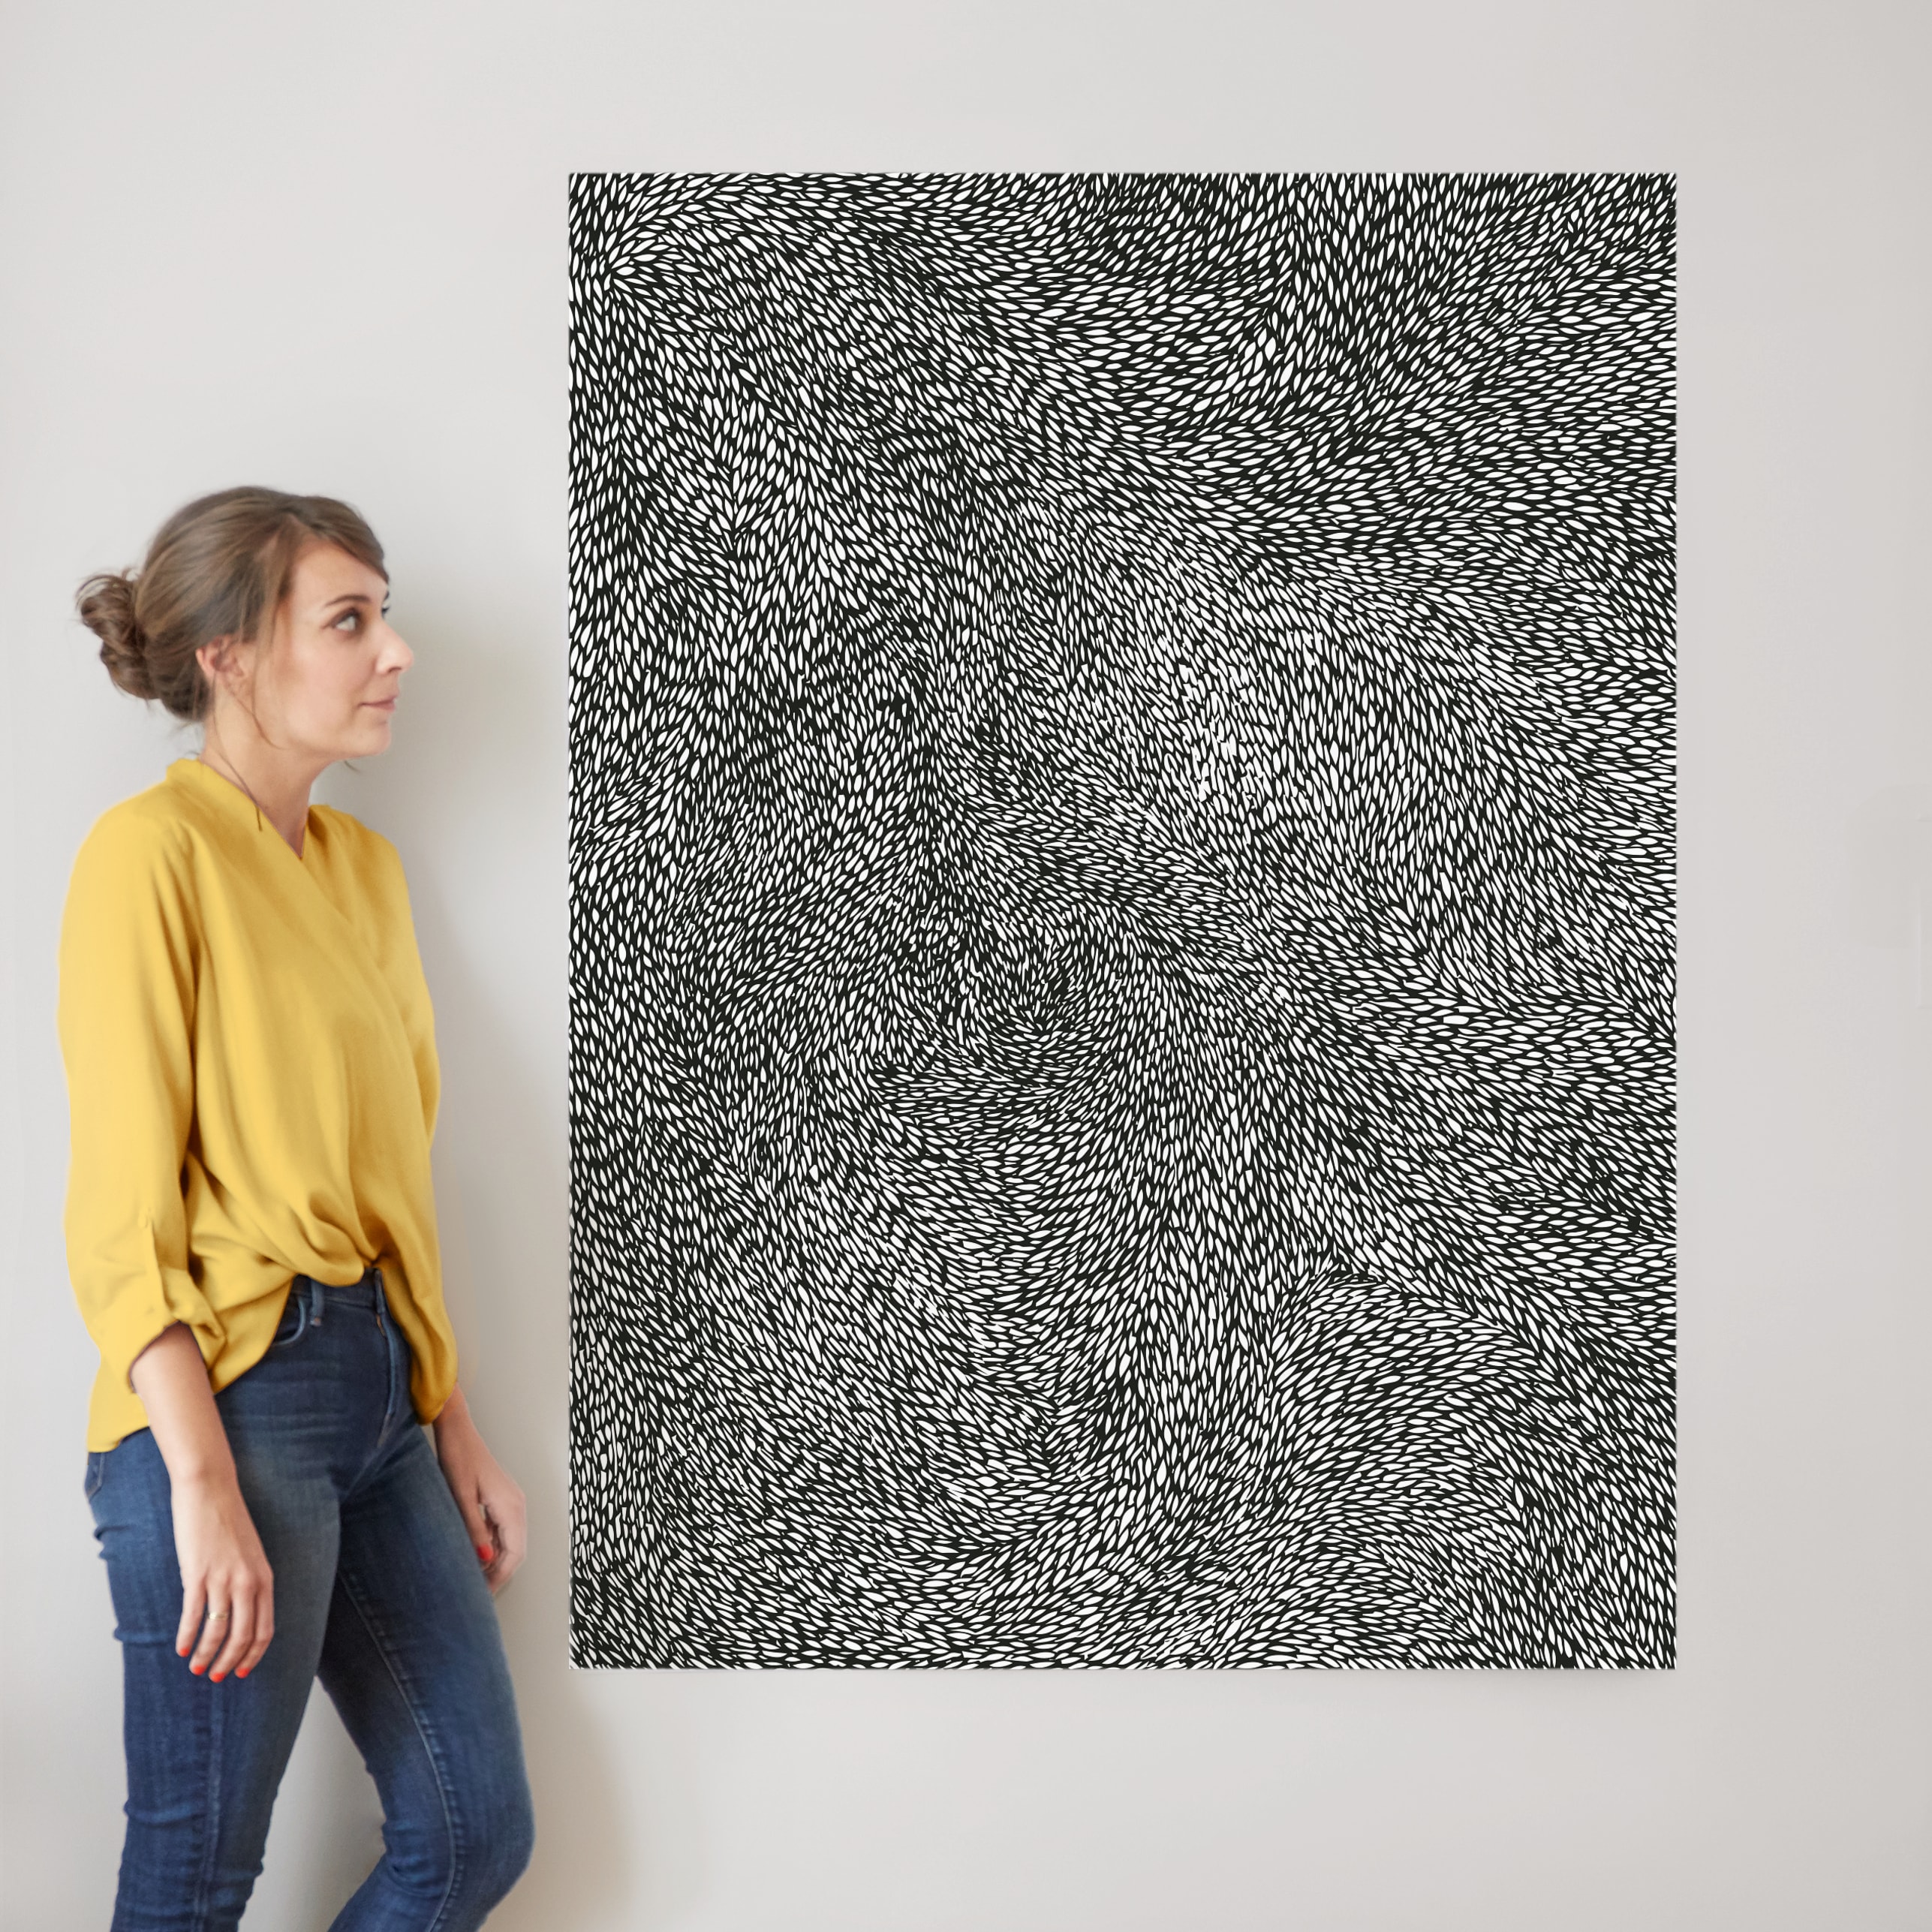 10,000 Grains Wall Art Prints by Bryn Namavari | Minted